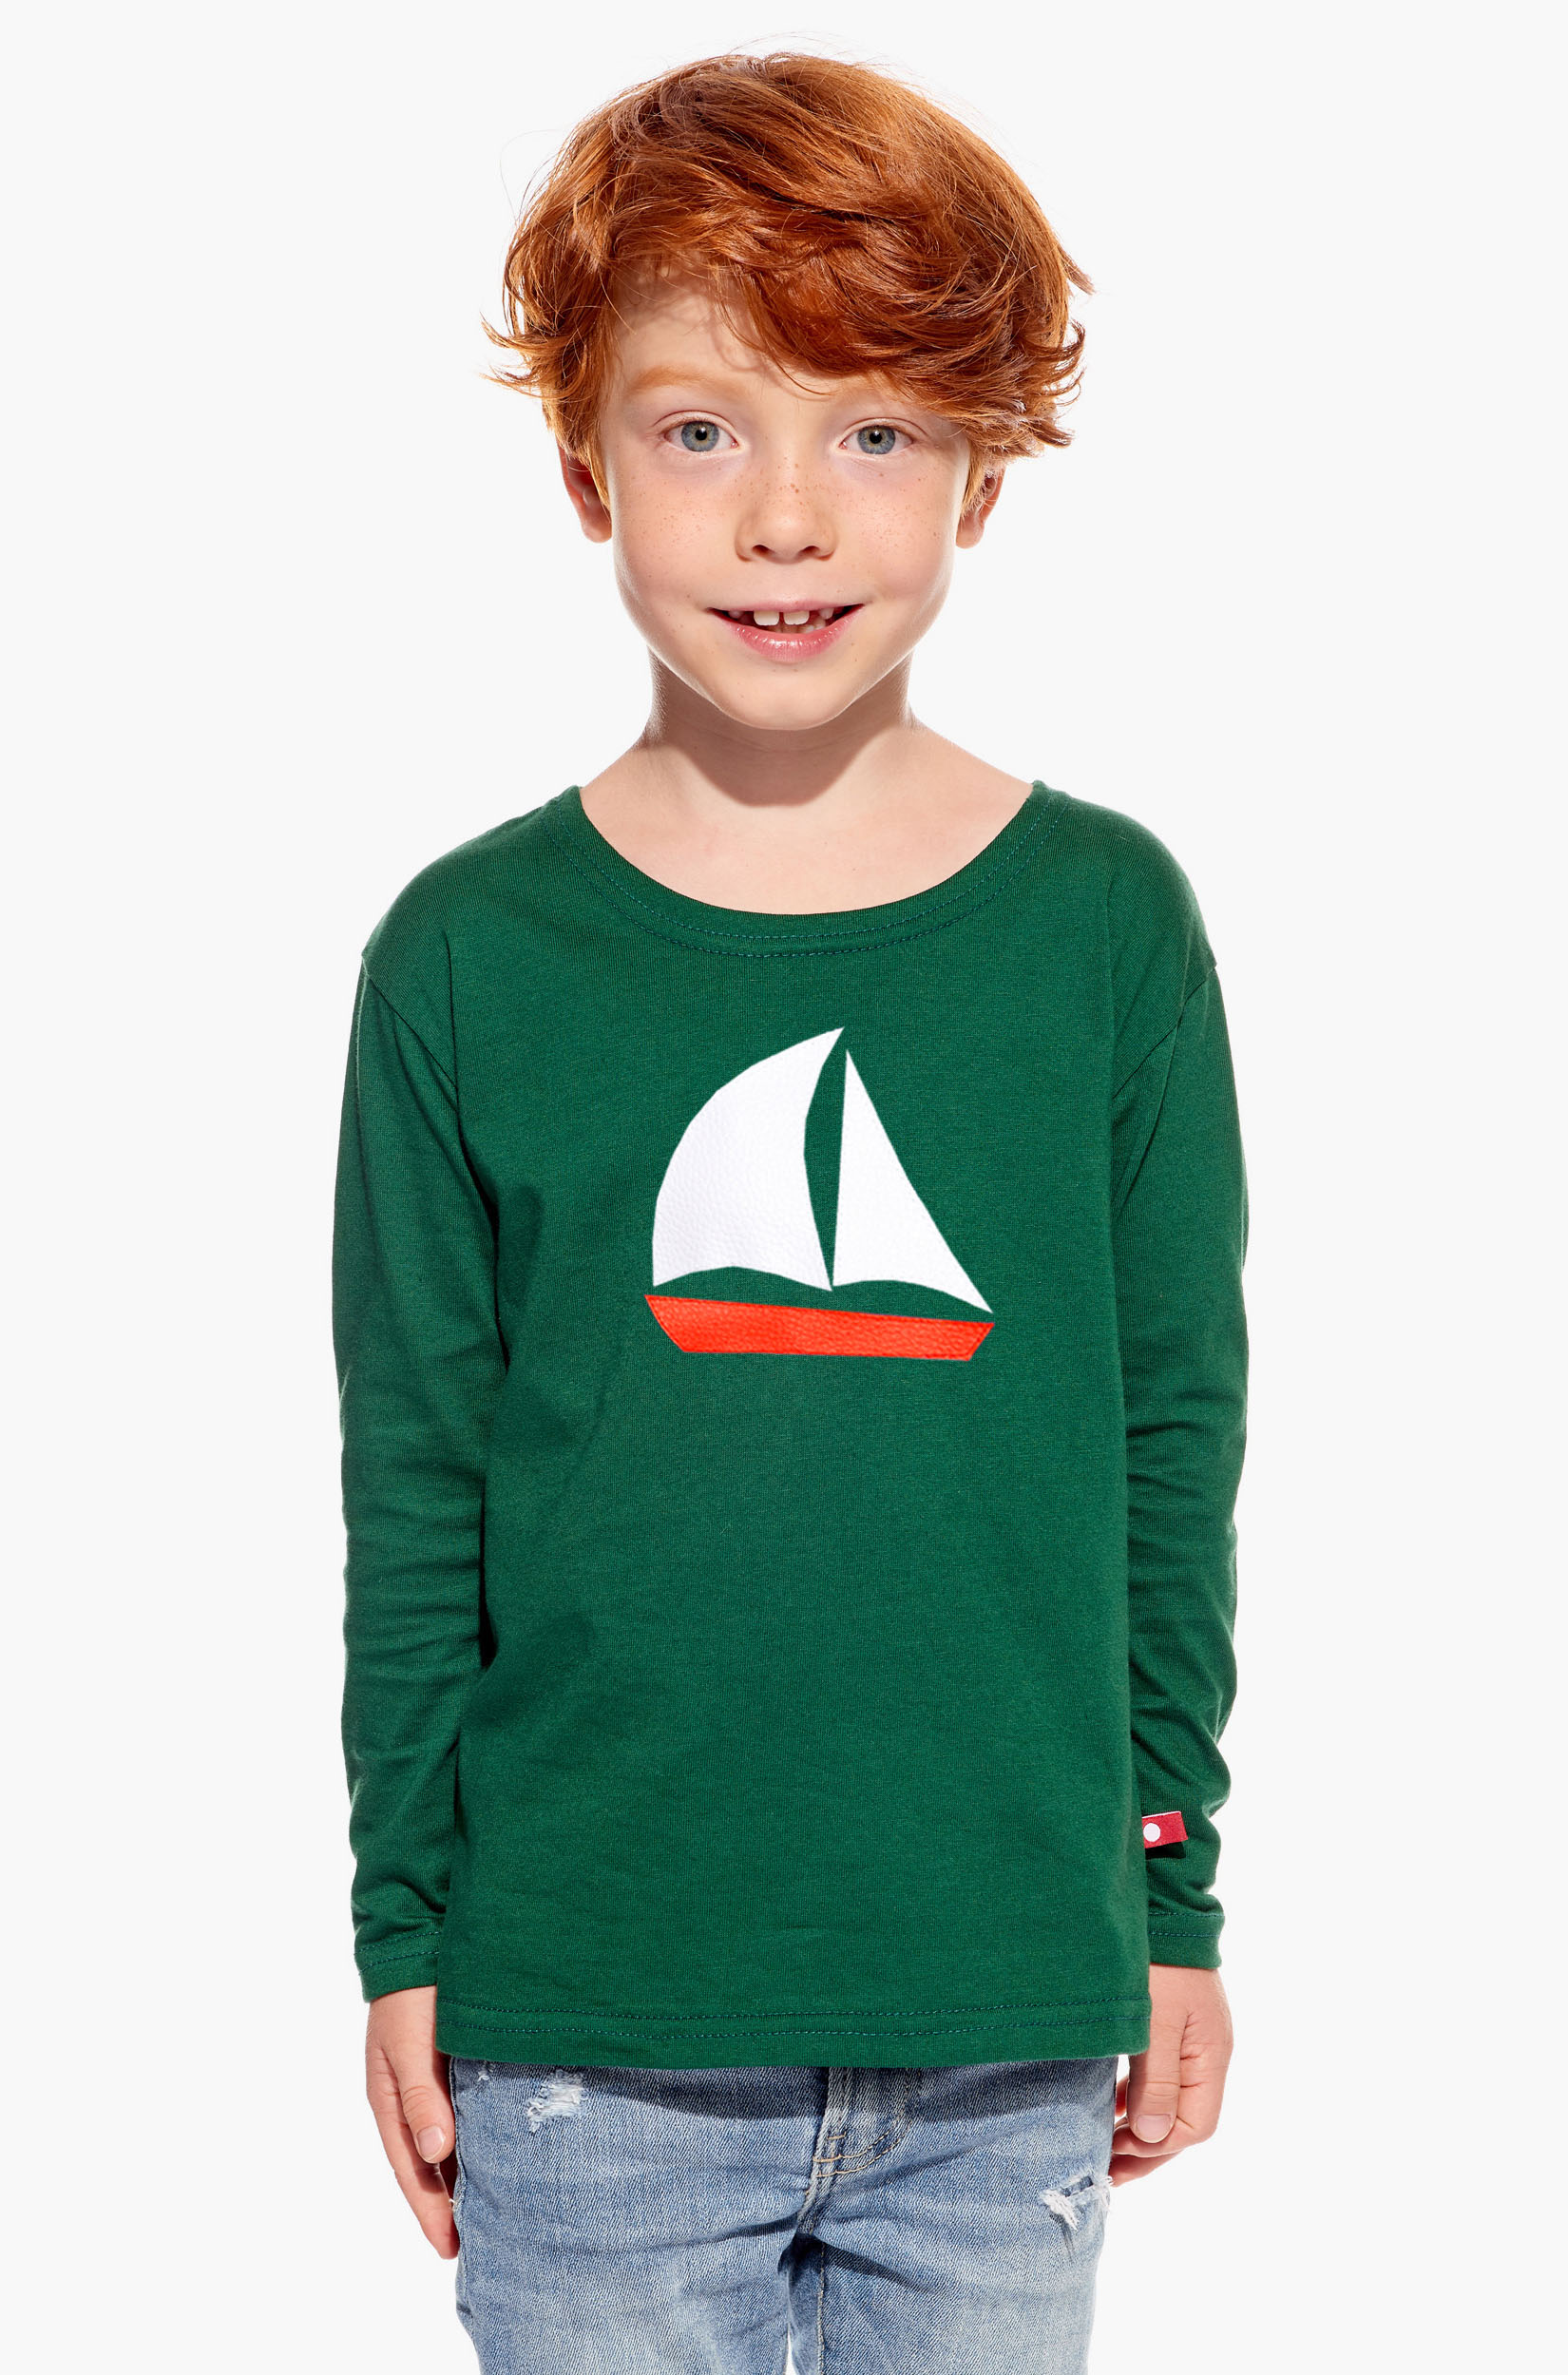 Shirt with sailboat